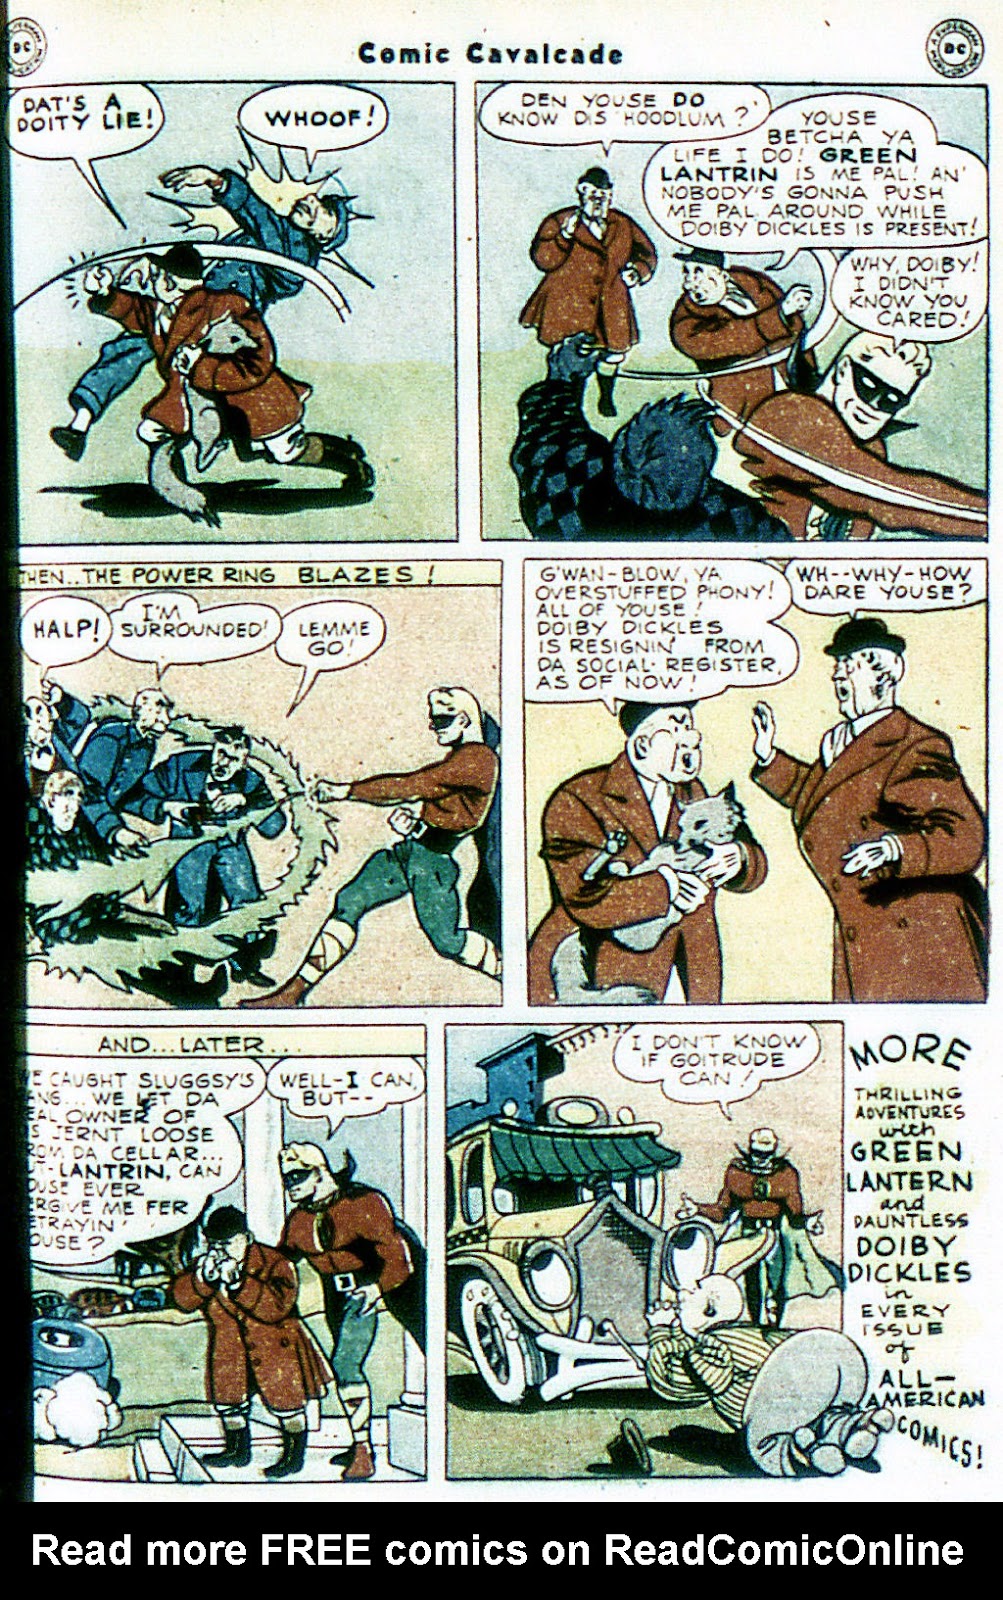 Comic Cavalcade issue 17 - Page 74